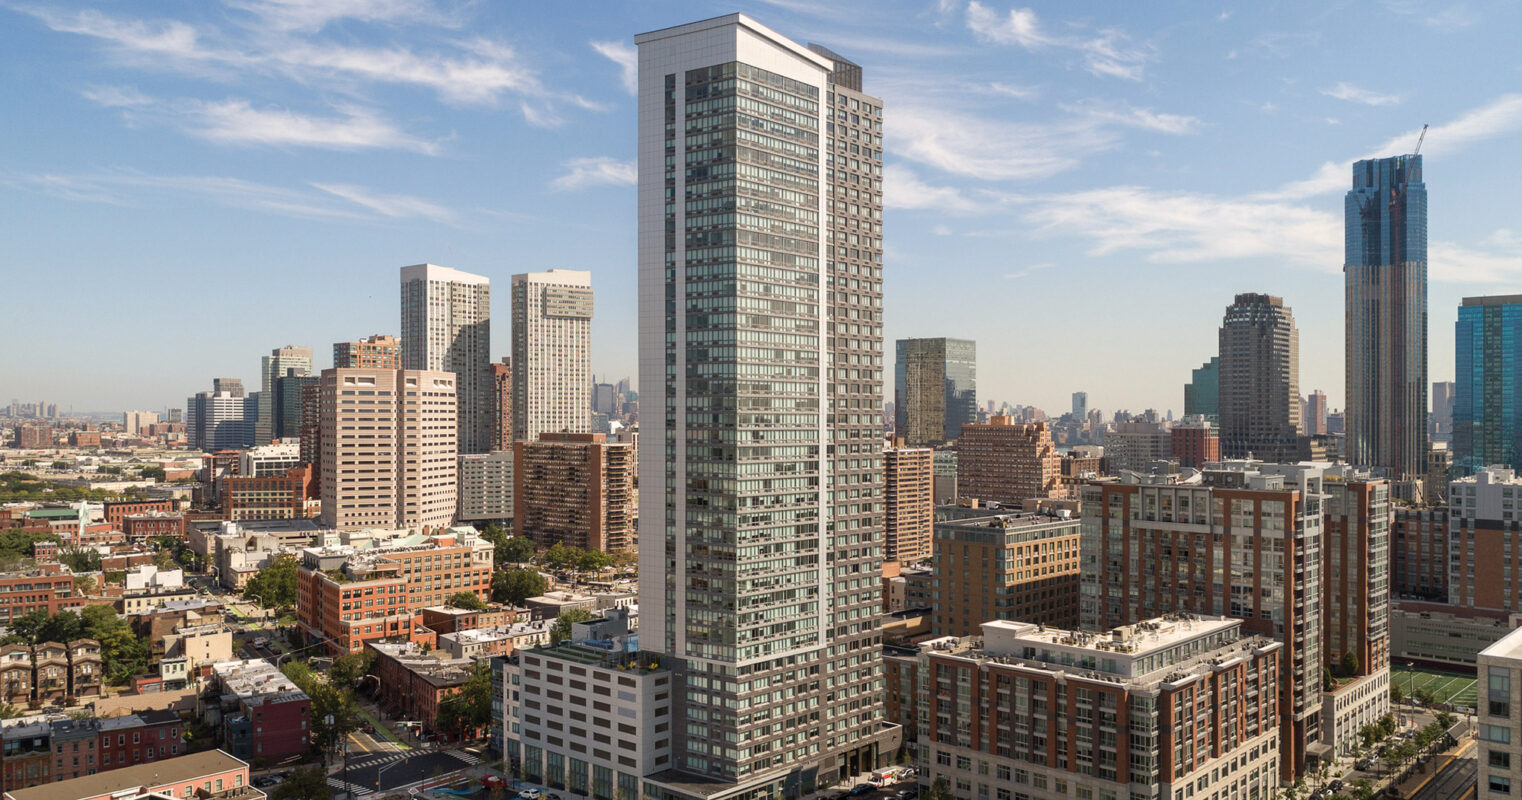 Urban vibrance: a crisp view of modern high-rise buildings amidst a sprawling cityscape.